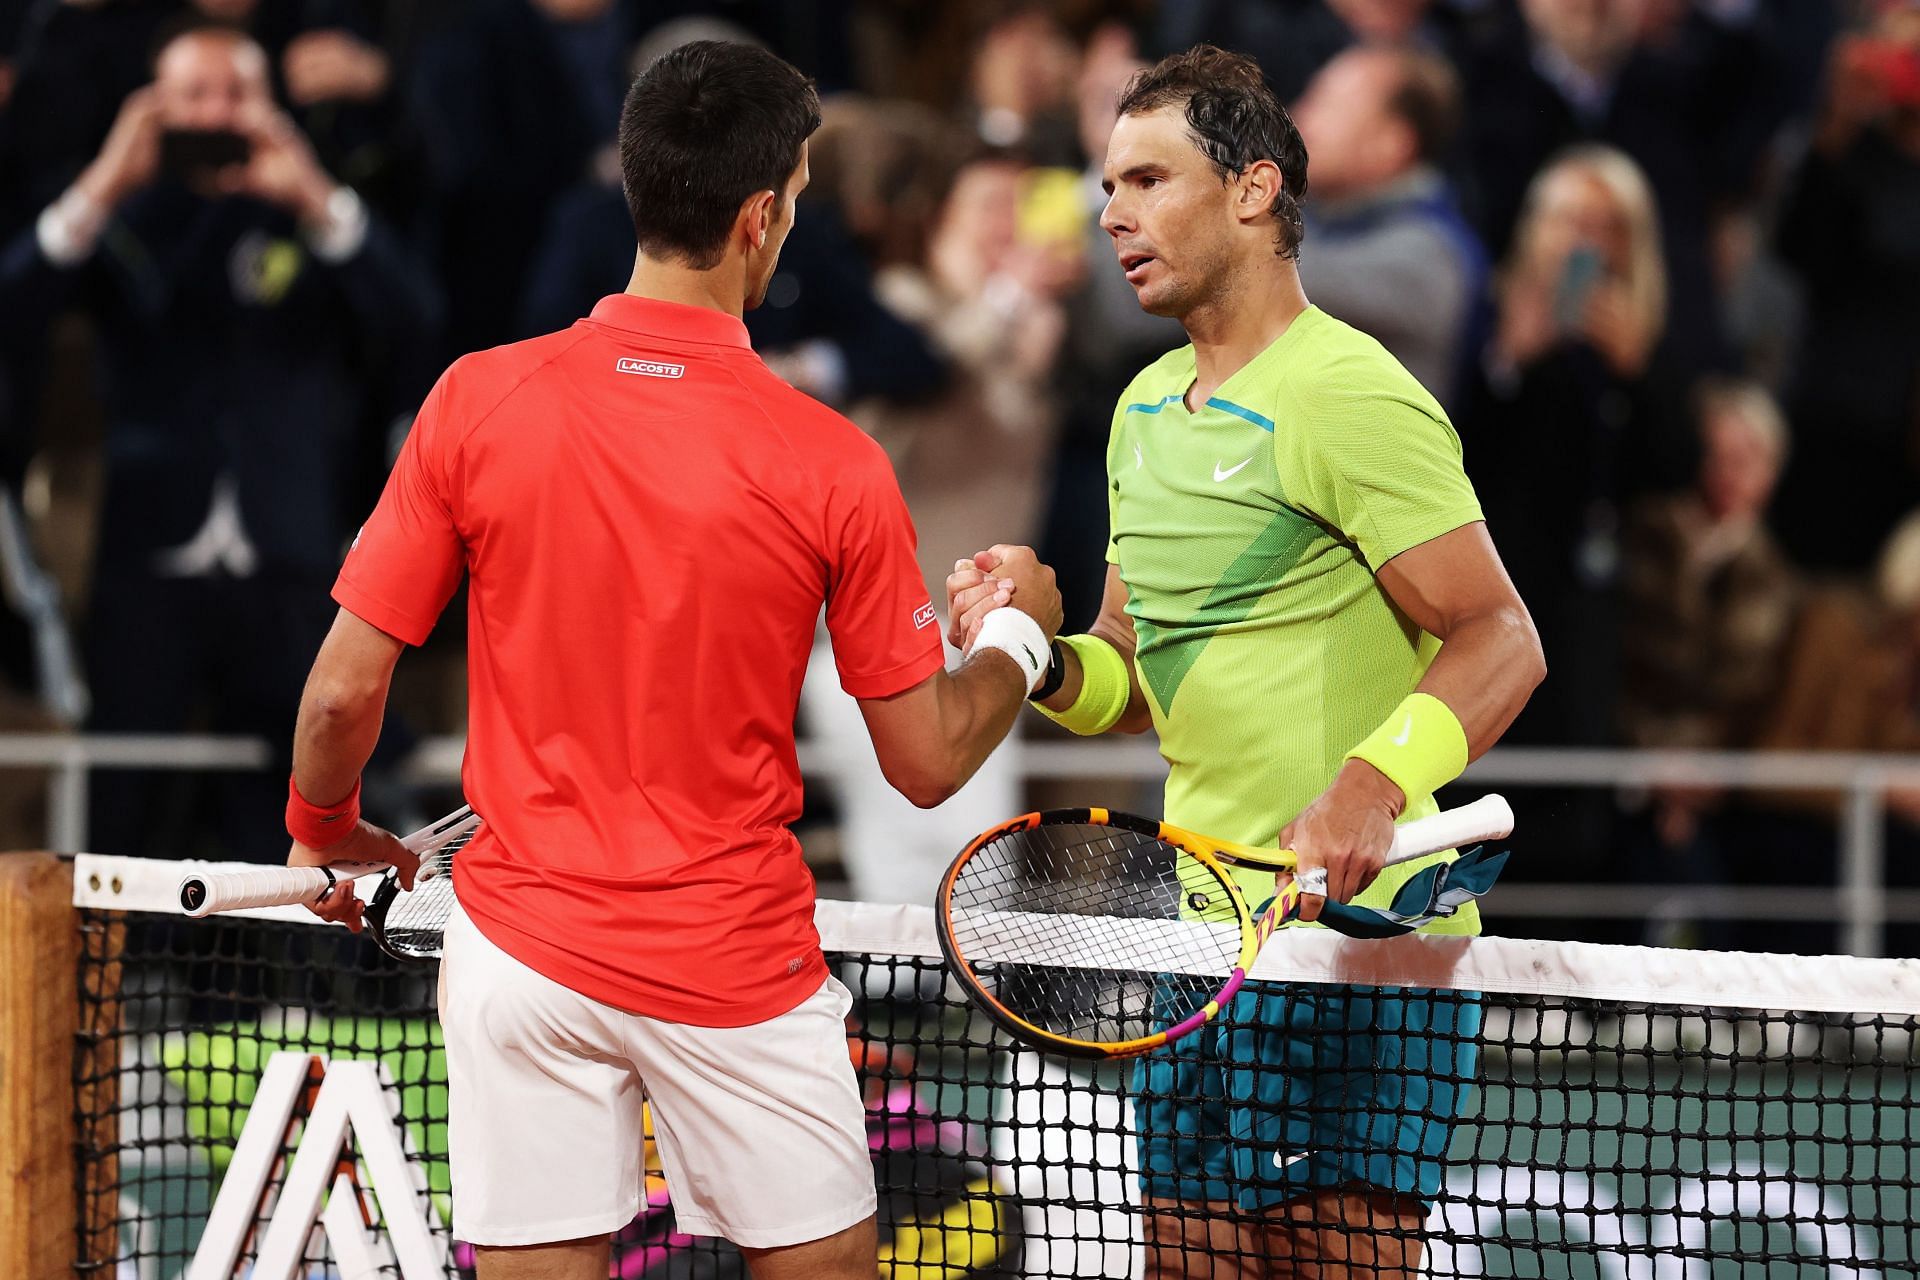 Novak Djokovic leads Rafael Nadal 30-29 in their head-to-head clashes.